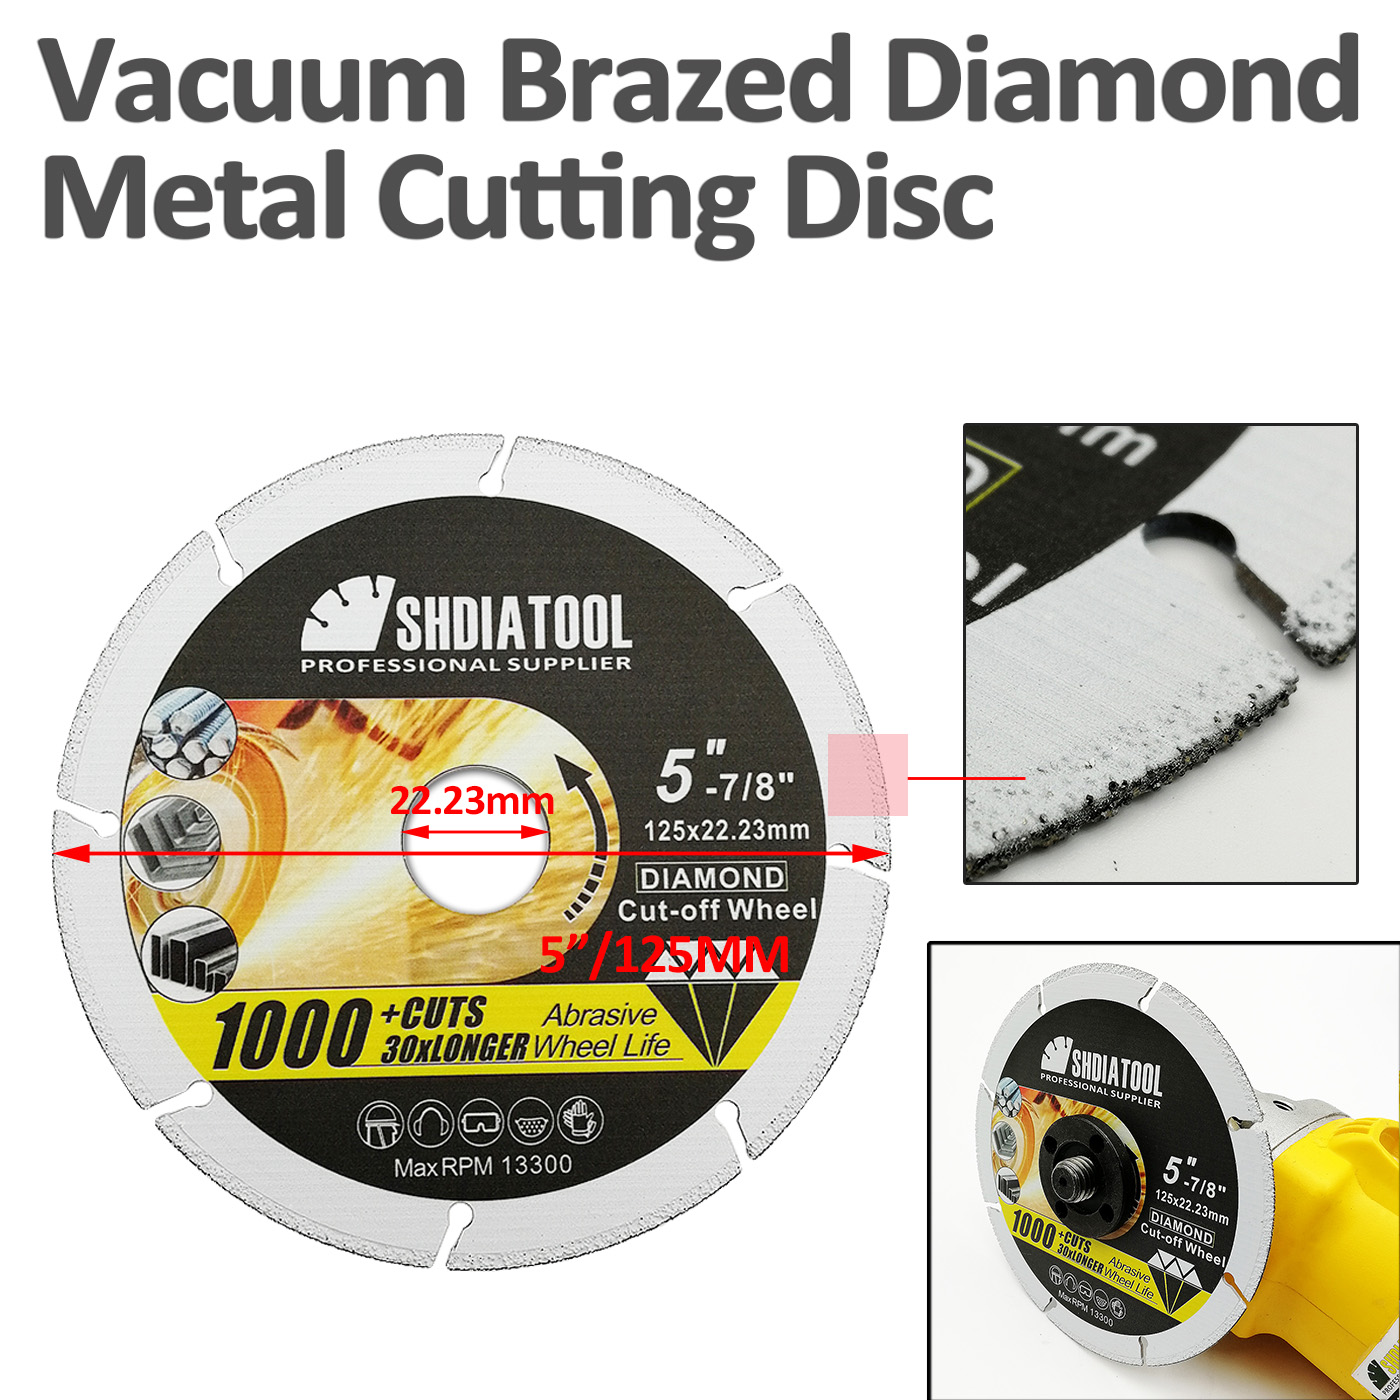 SHDIATOOL 2pcs Diamond Cut-off Wheel Blade Vacuum Brazed Diamond Metal Cutting Disc For Steel Tube, Iron Rebar, Angle Steel